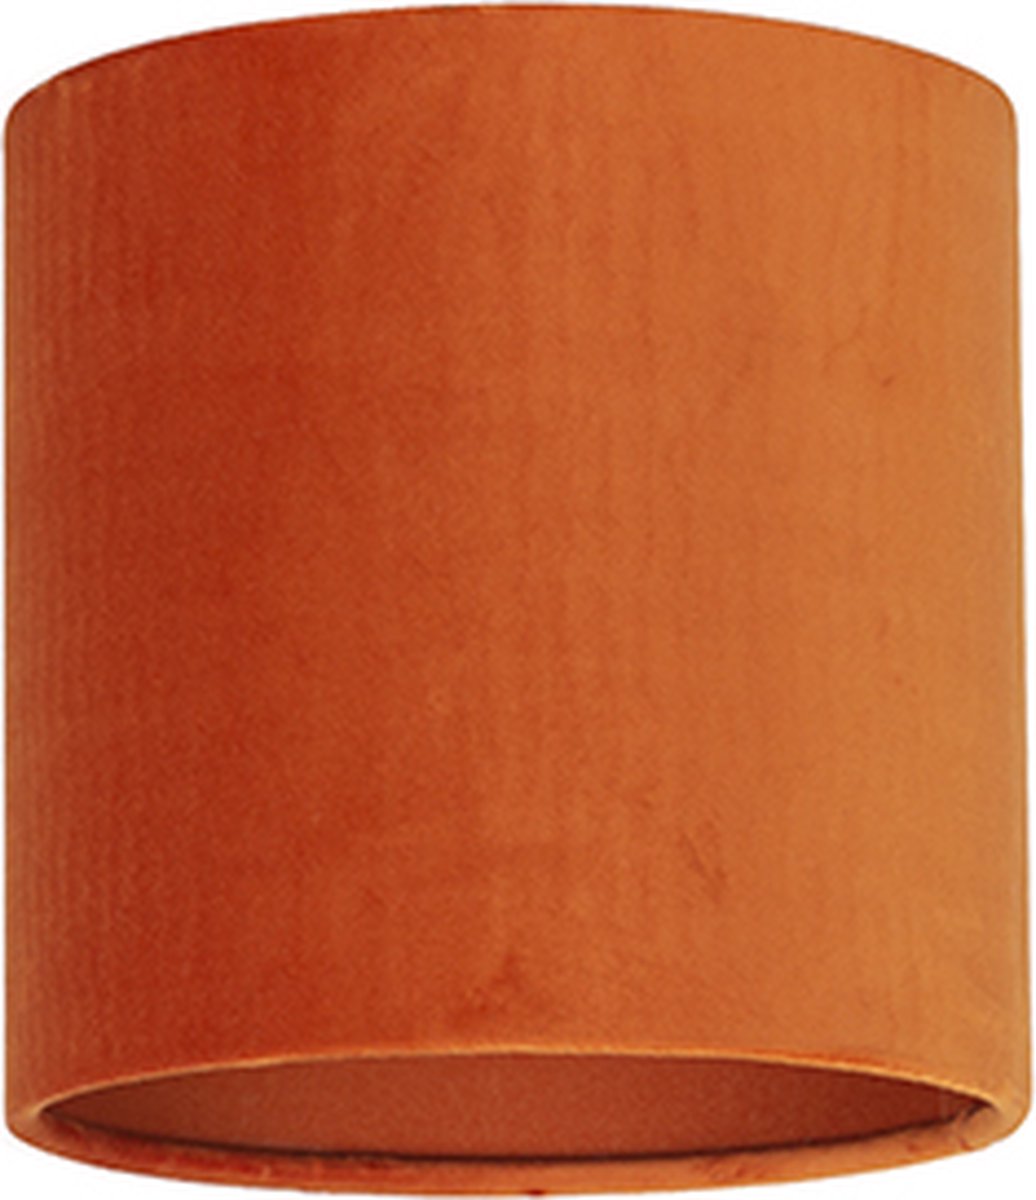 Uniqq Lampenkap velours / stof oranje transparant Ø 18 cm - 15 cm hoog